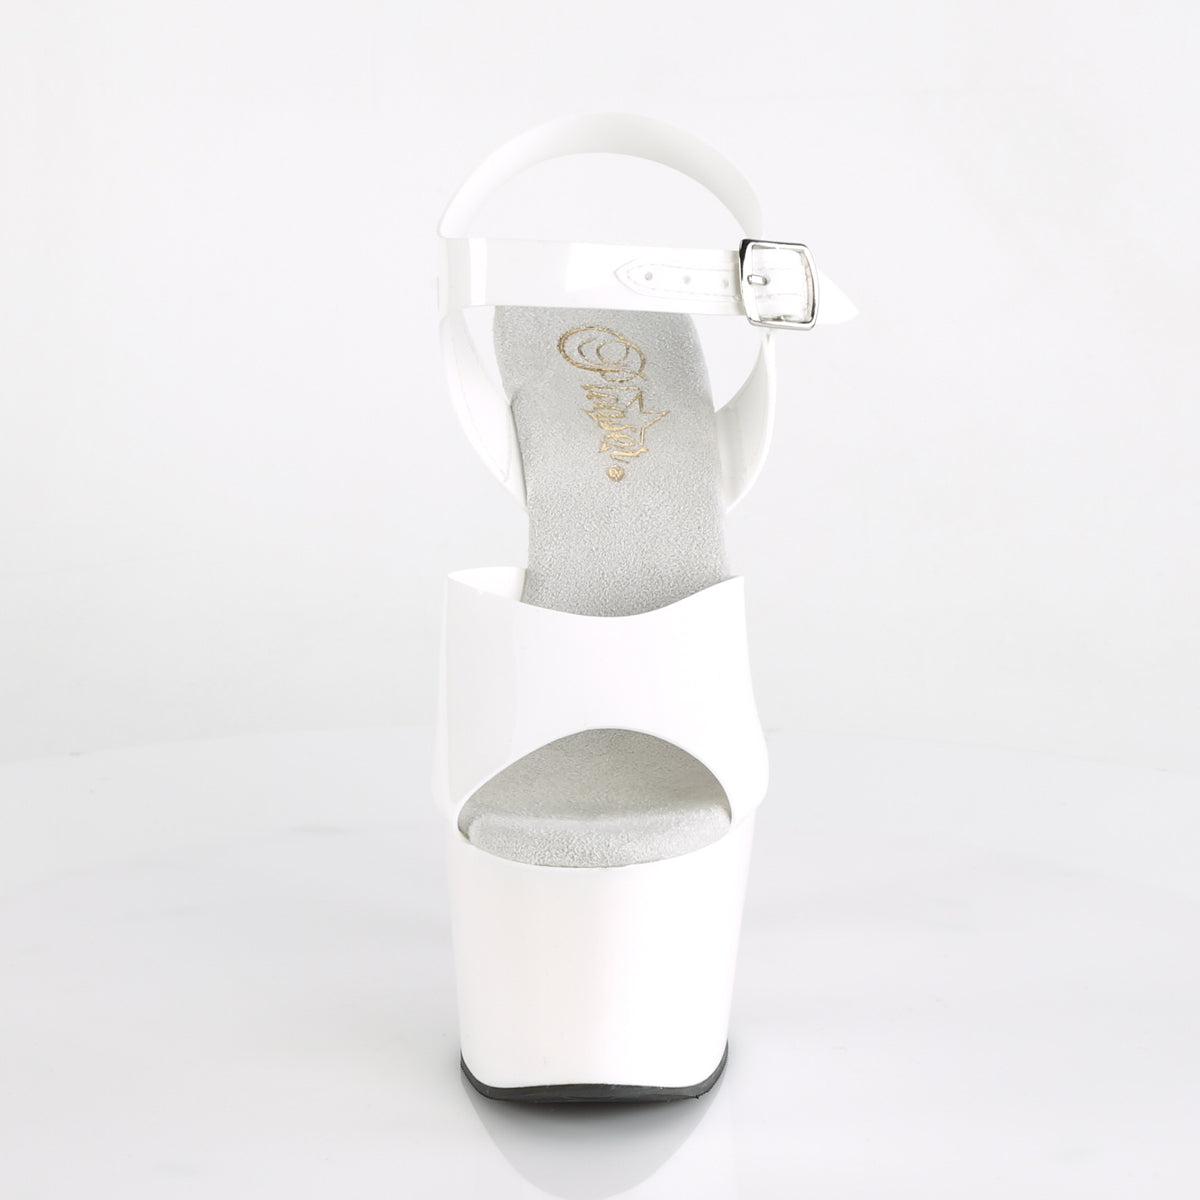 ADORE-708N White (Jelly-Like) TPU/White Platform Sandal Pleaser